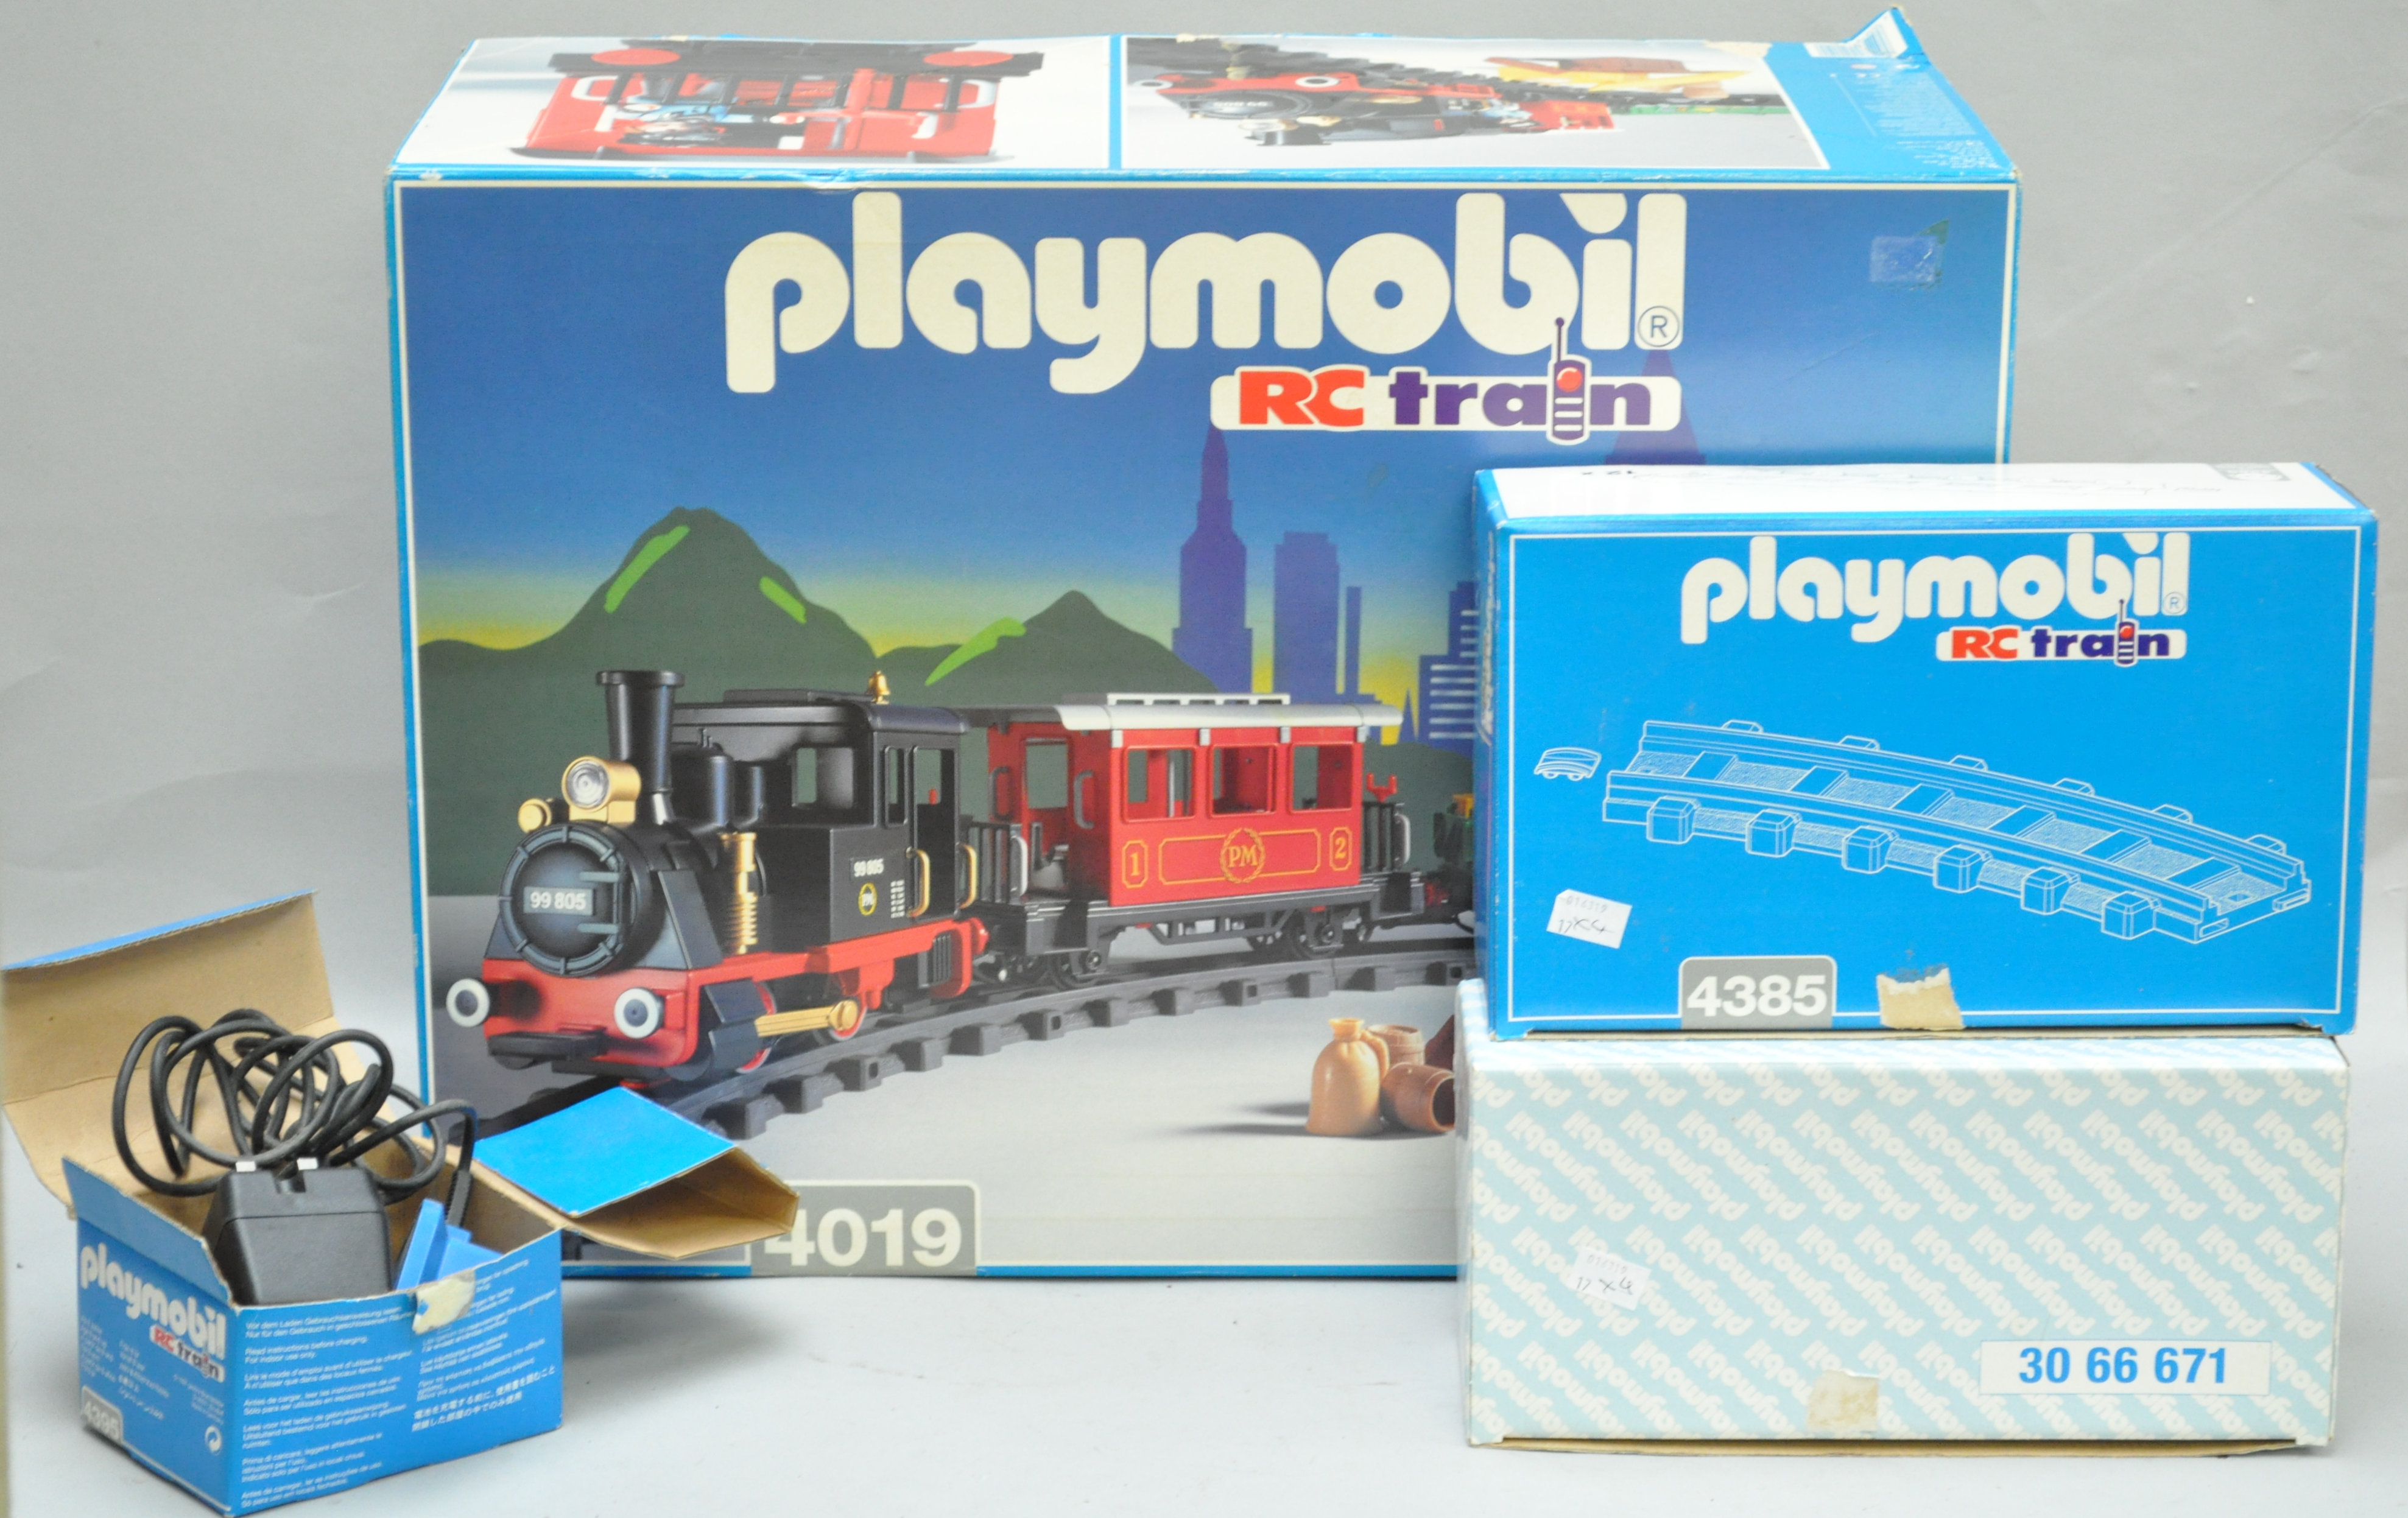 A Playmobil 4019 model railway,